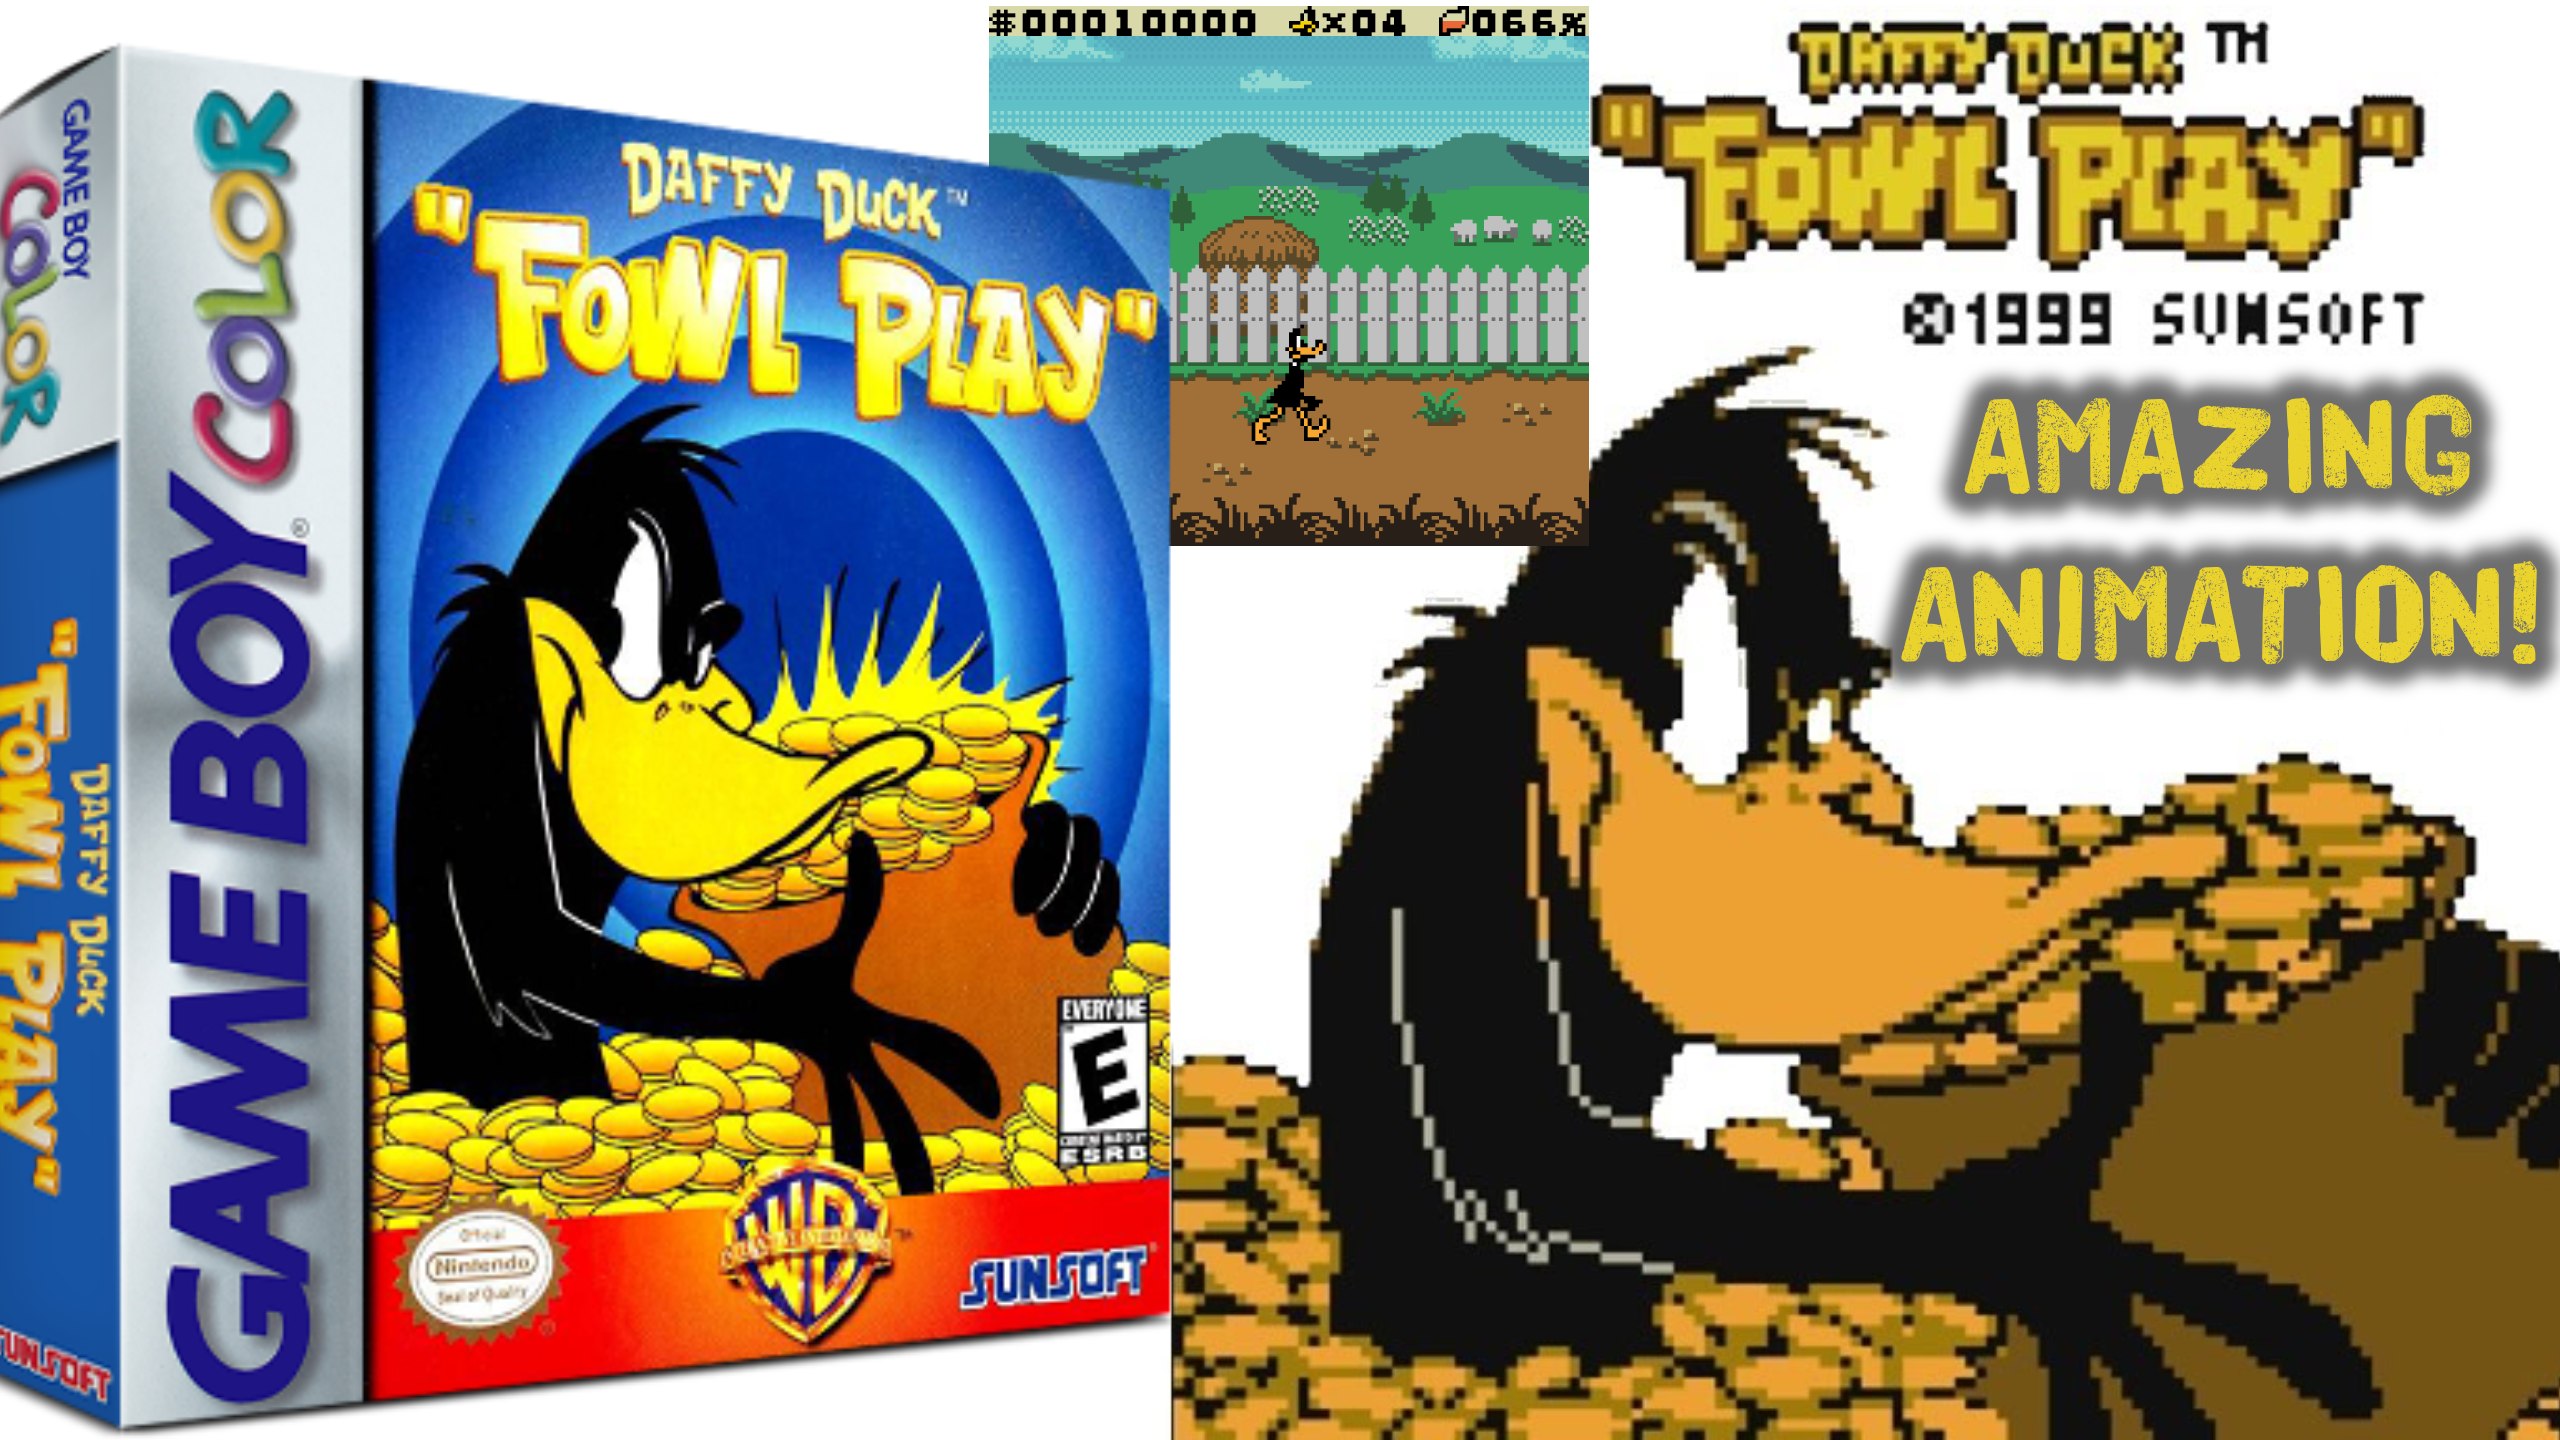 Daffy Duck: Fowl Play (GBC, 1999) is an animation dream